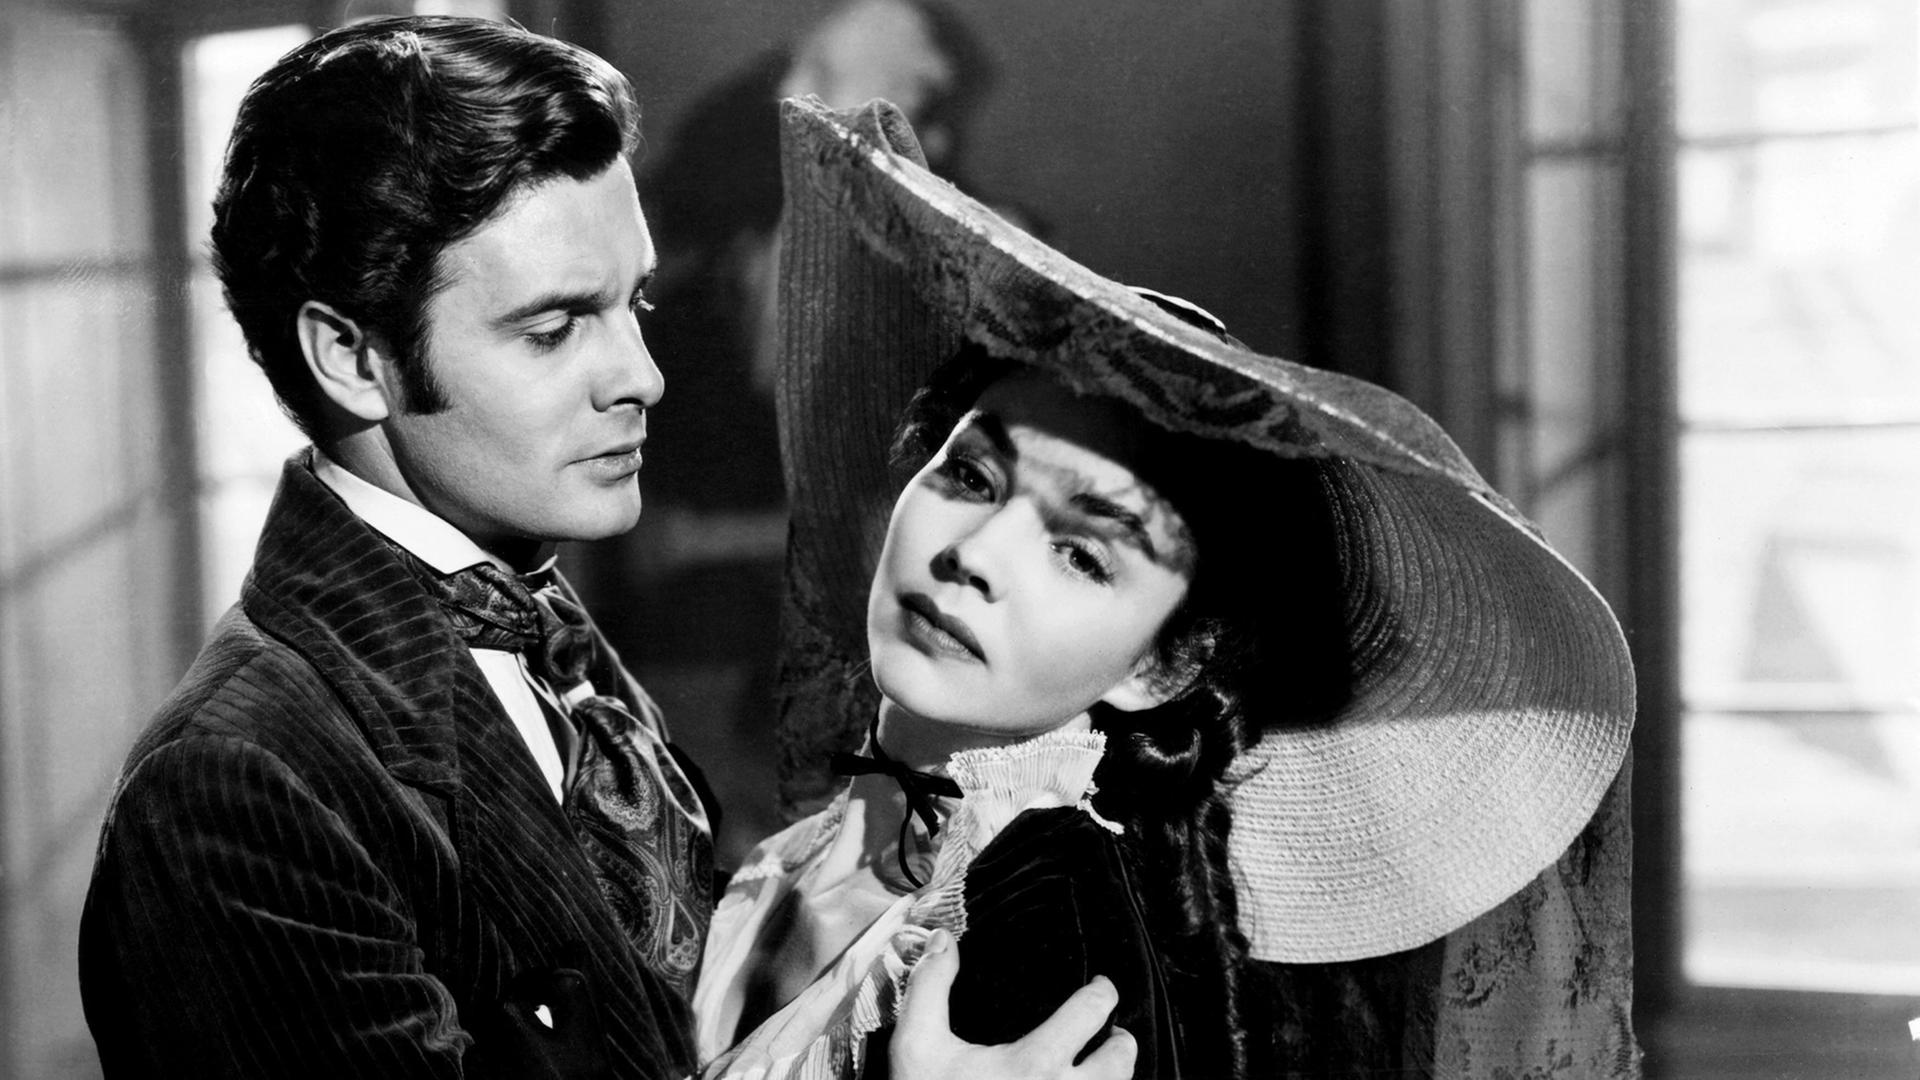 Madame Bovary - Szene aus dem Film mit Louis Jourdan und Jennifer Jones, 1949.